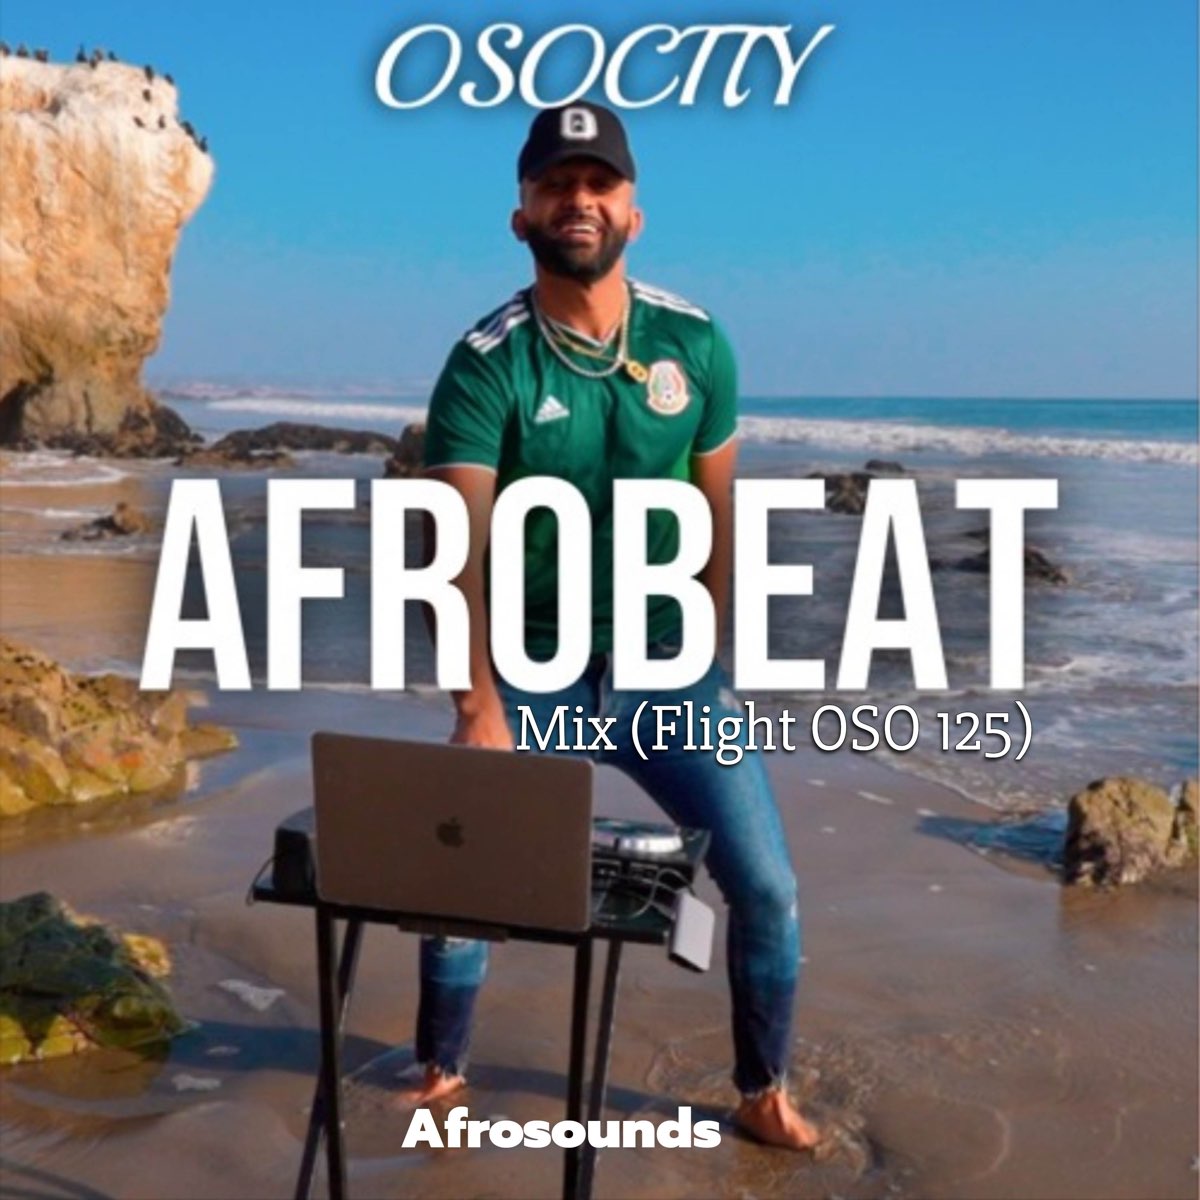 ‎Afrobeat Mix (Flight Oso 125) [feat. Osocity] EP by Afrosounds on